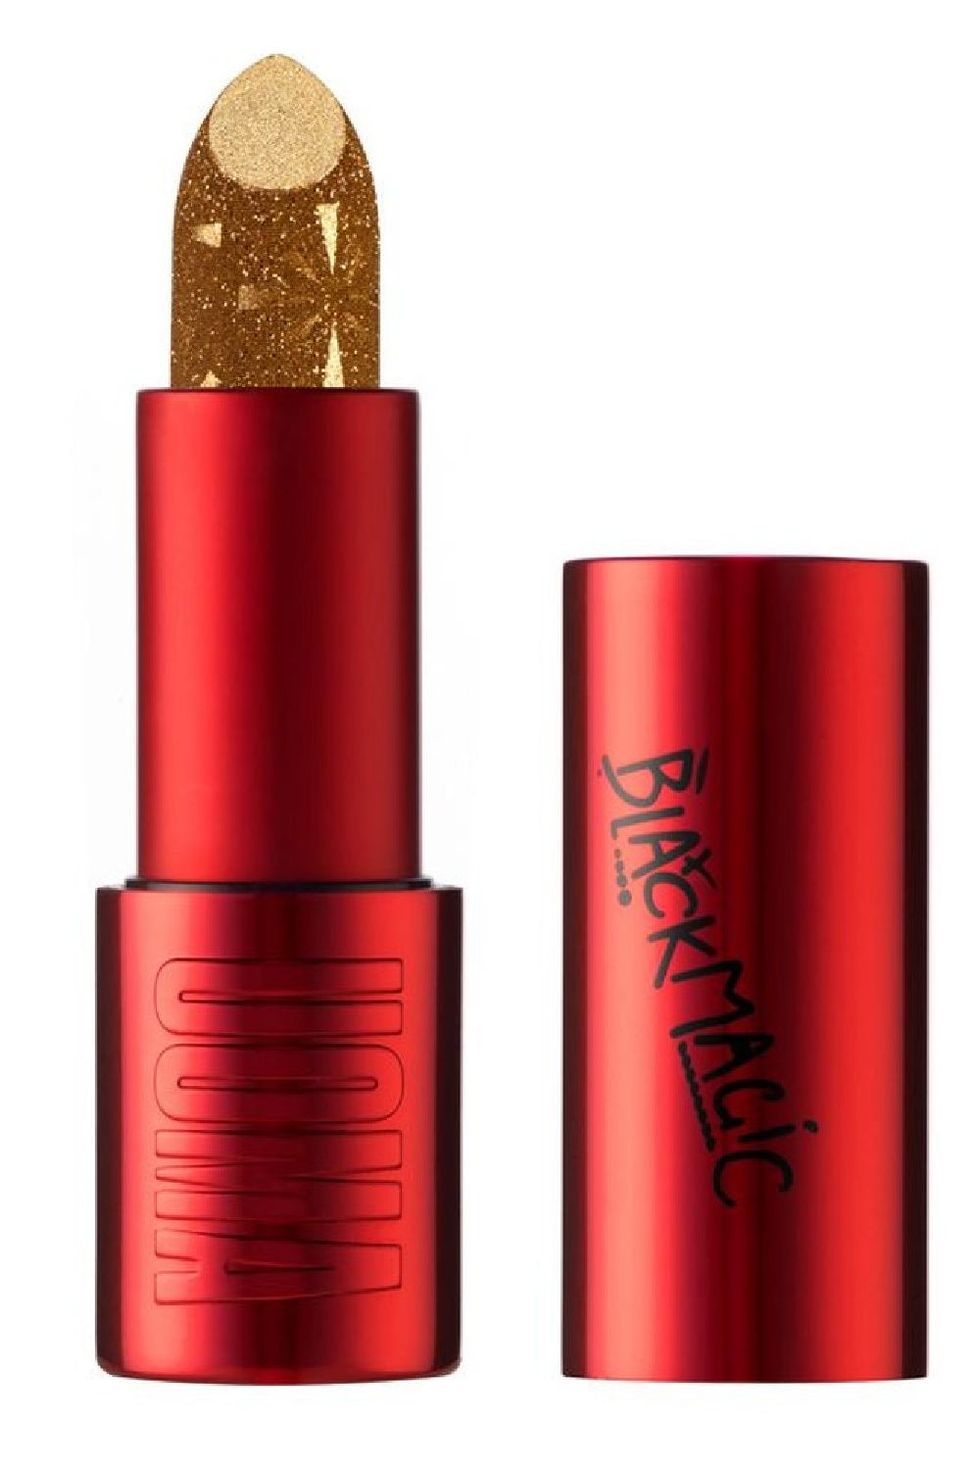 Uoma Beauty Black Magic Metallic Shine Lipstick in Lady of Gold